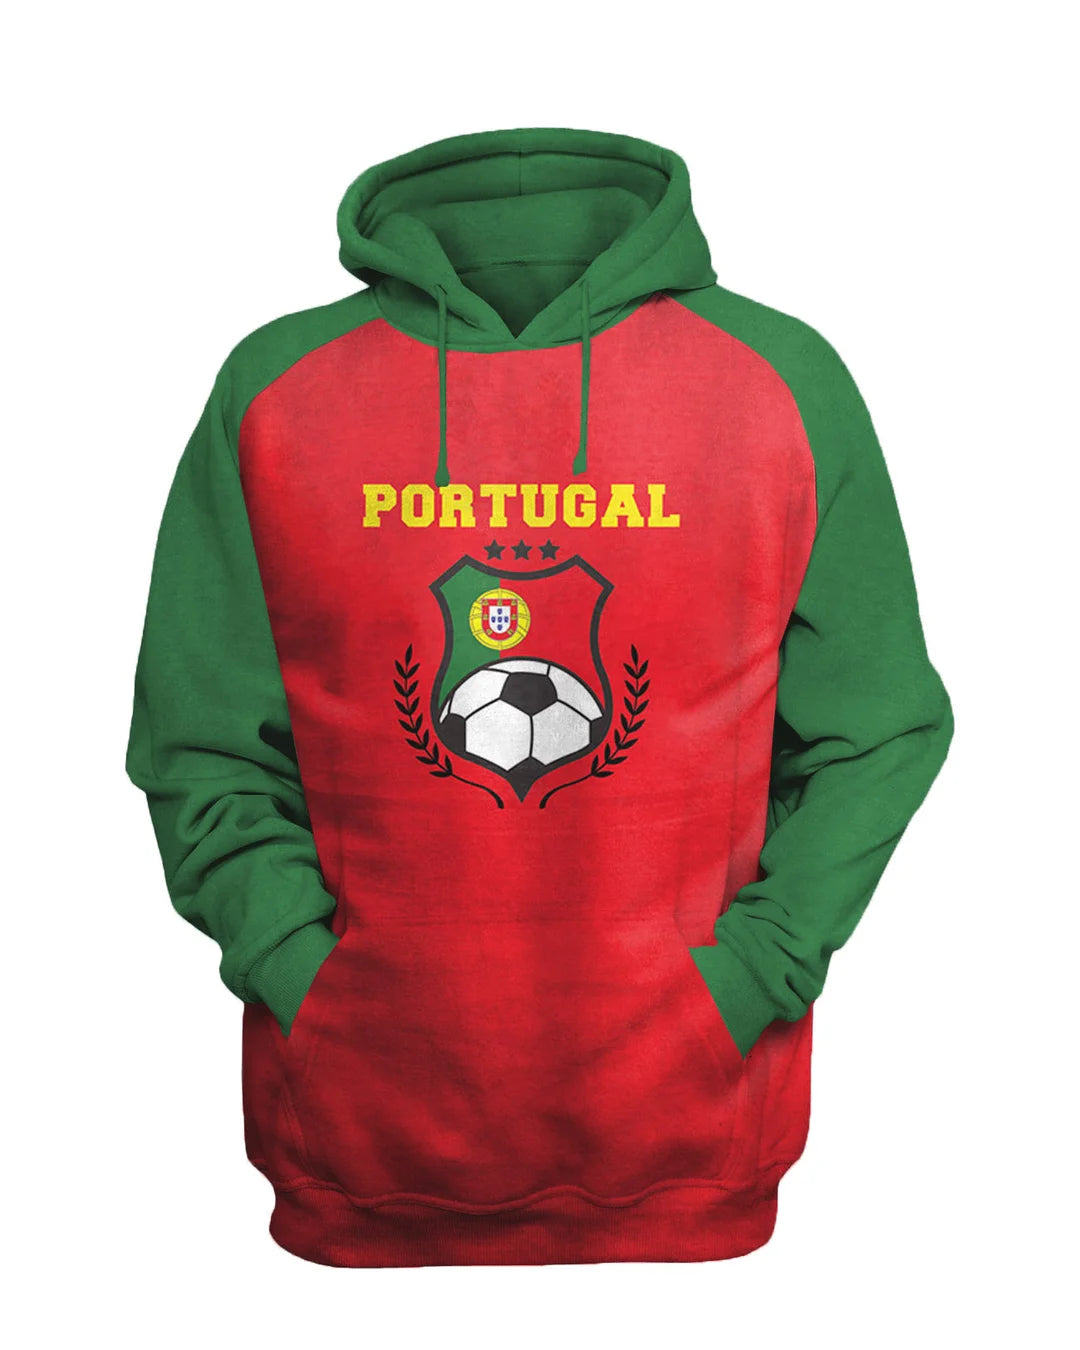 Portugal National Football Team Printed Sweatshirt Set - DUVAL